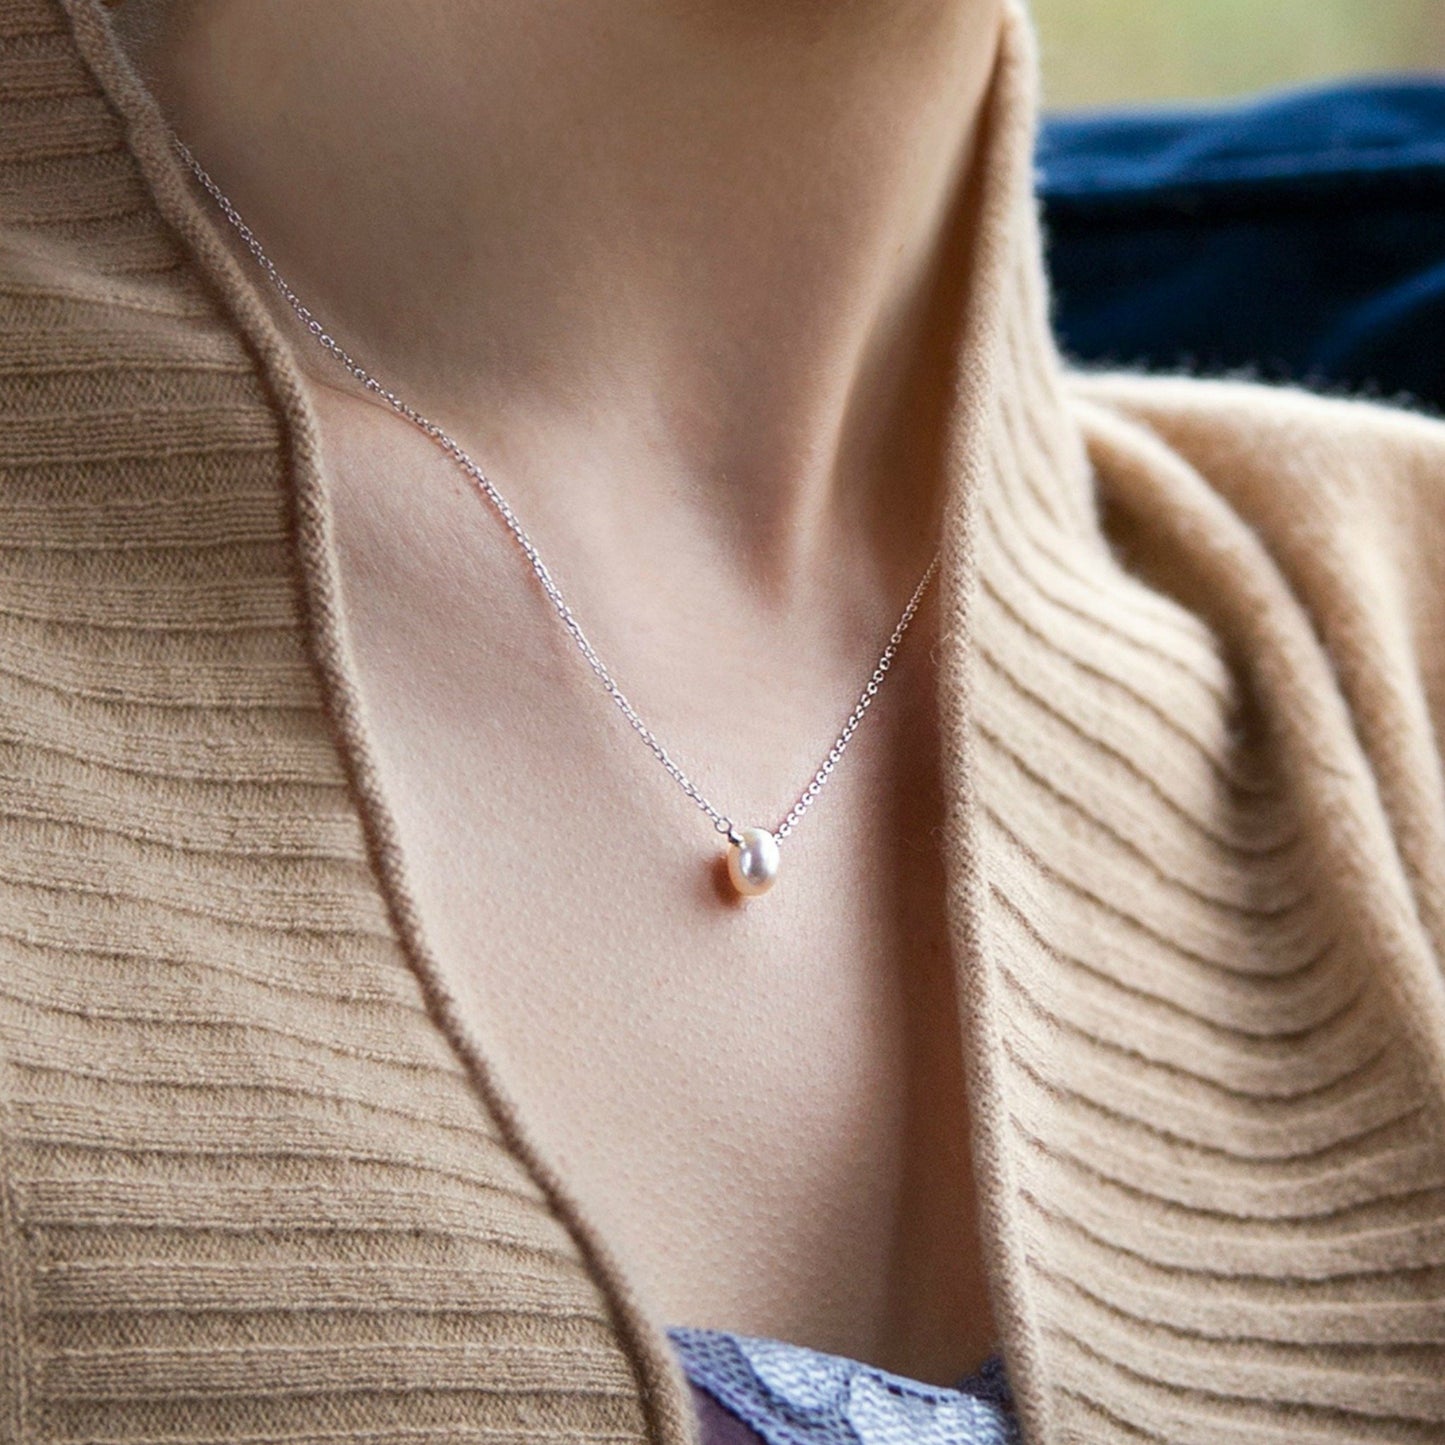 16th Birthday Gift - Birthstone Necklace